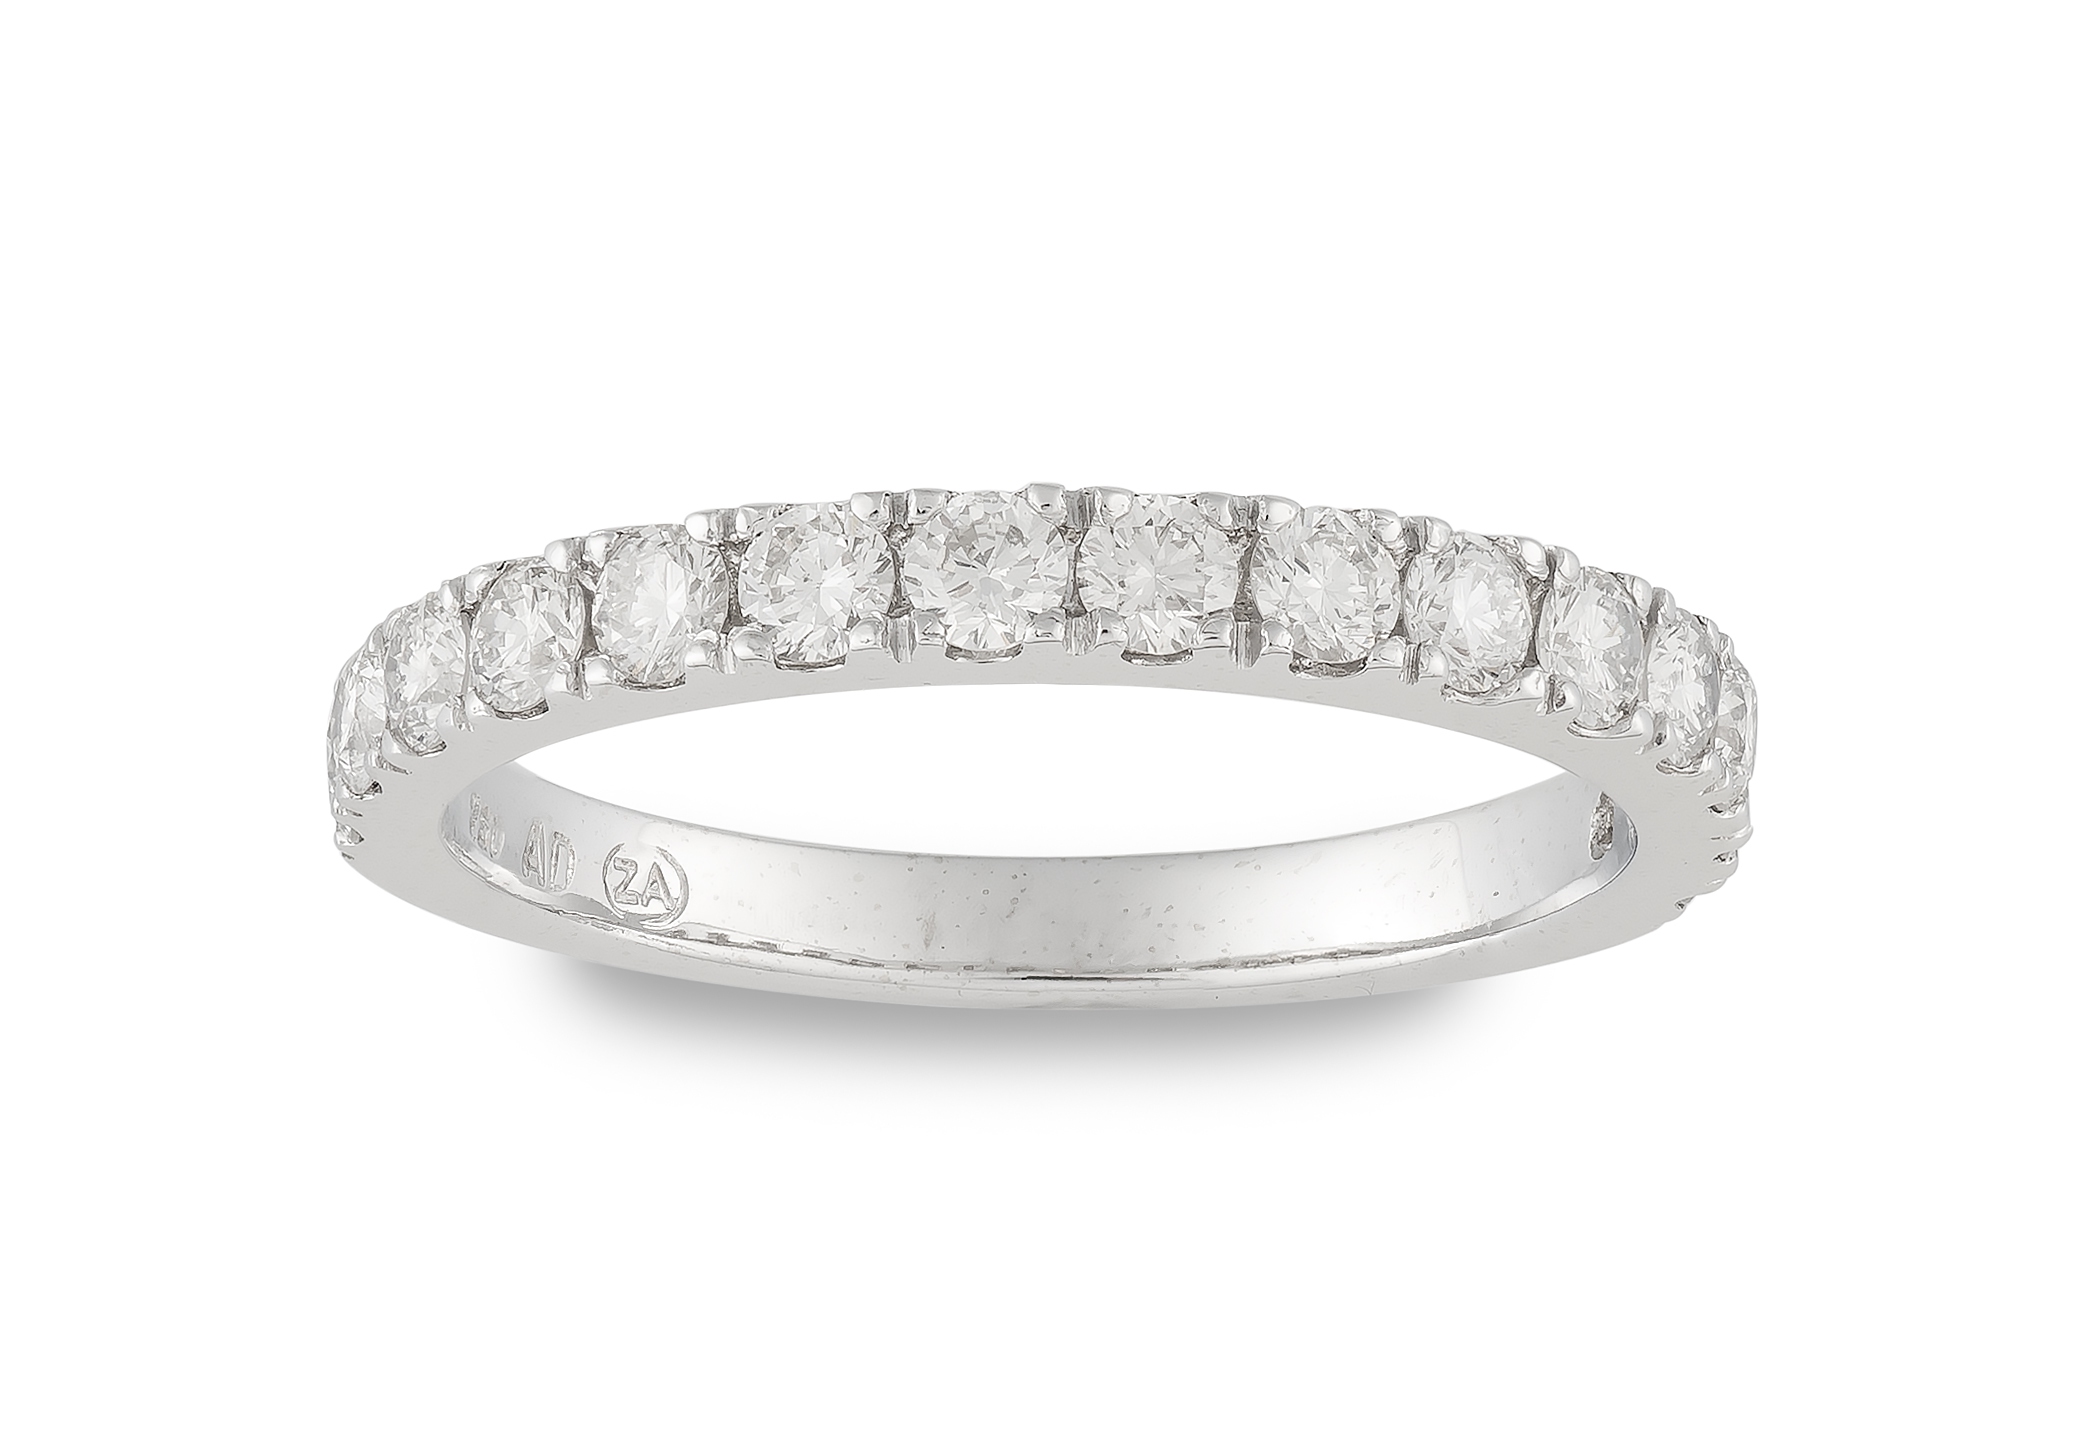 Diamond and 18ct white gold half-eternity ring